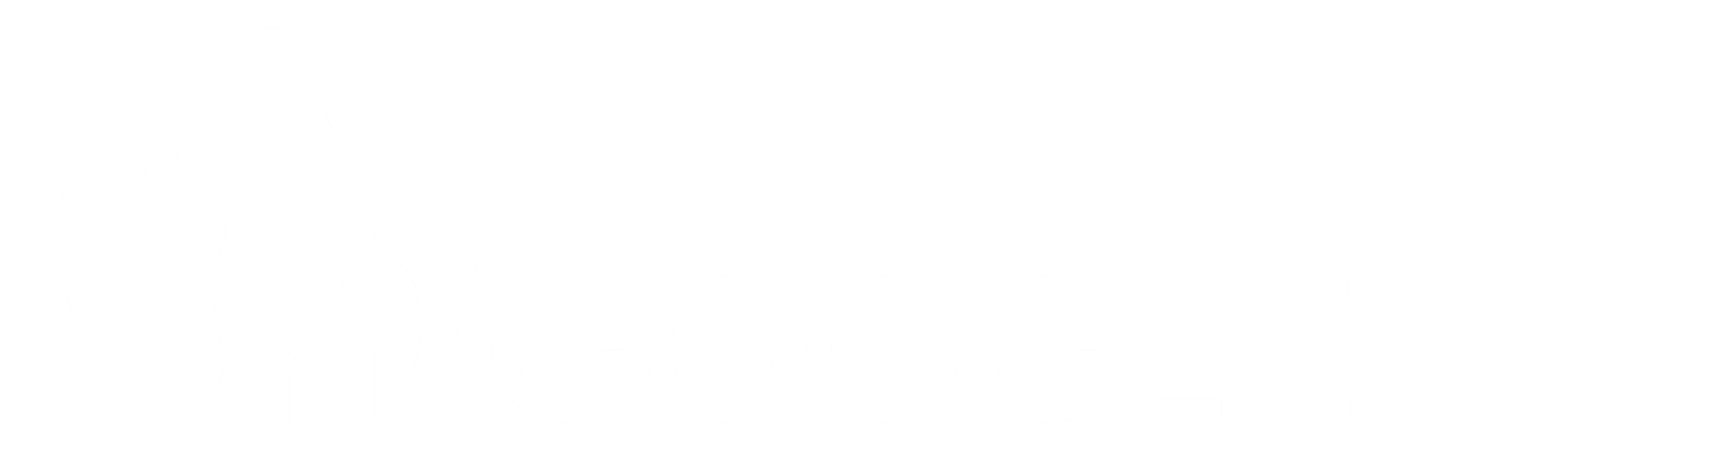 2020 miGoogle Conference, November 5-6, Notre Dame Preparatory School